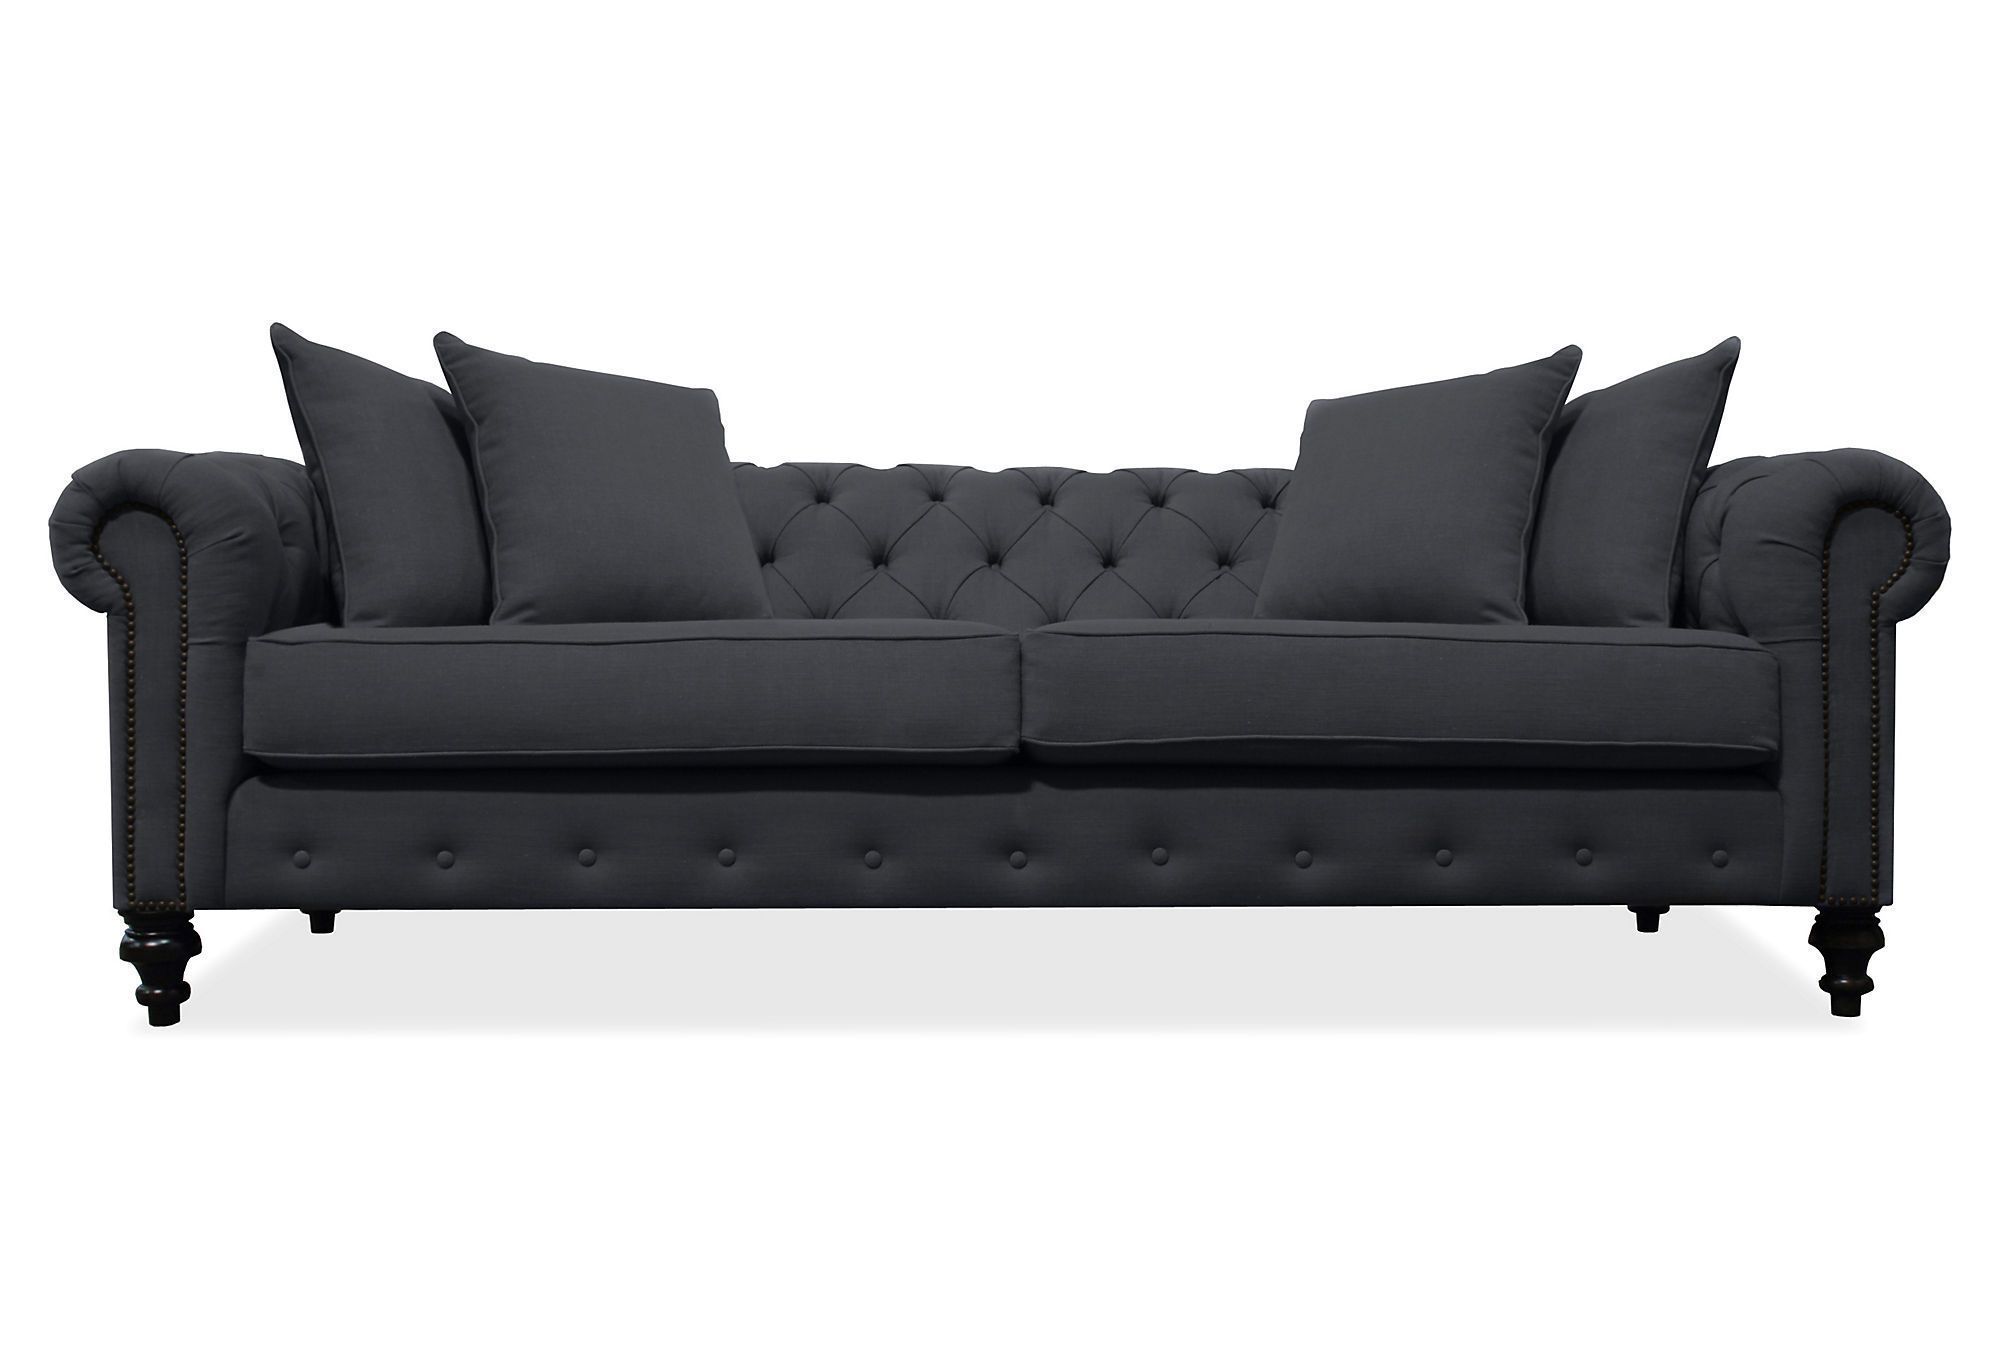 Saretta Tufted Linen Sofa, Charcoal | Linen Sofa, Sofa, Family Living Rooms Inside Light Charcoal Linen Sofas (Gallery 13 of 20)